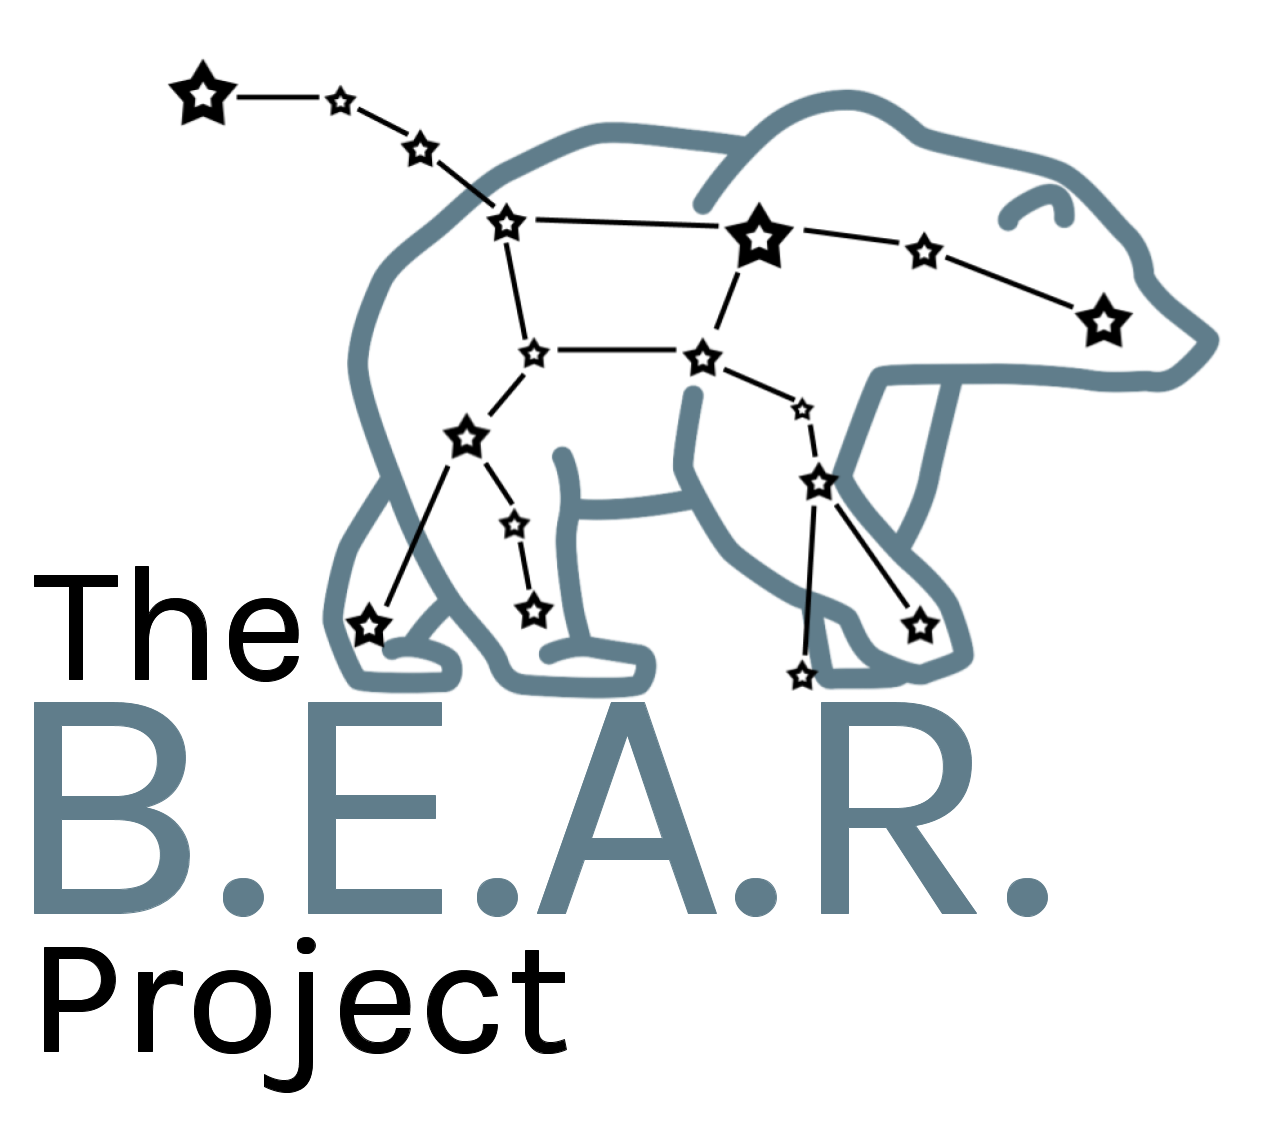 BEAR project logo - a bear outlining the Ursa Major constellation